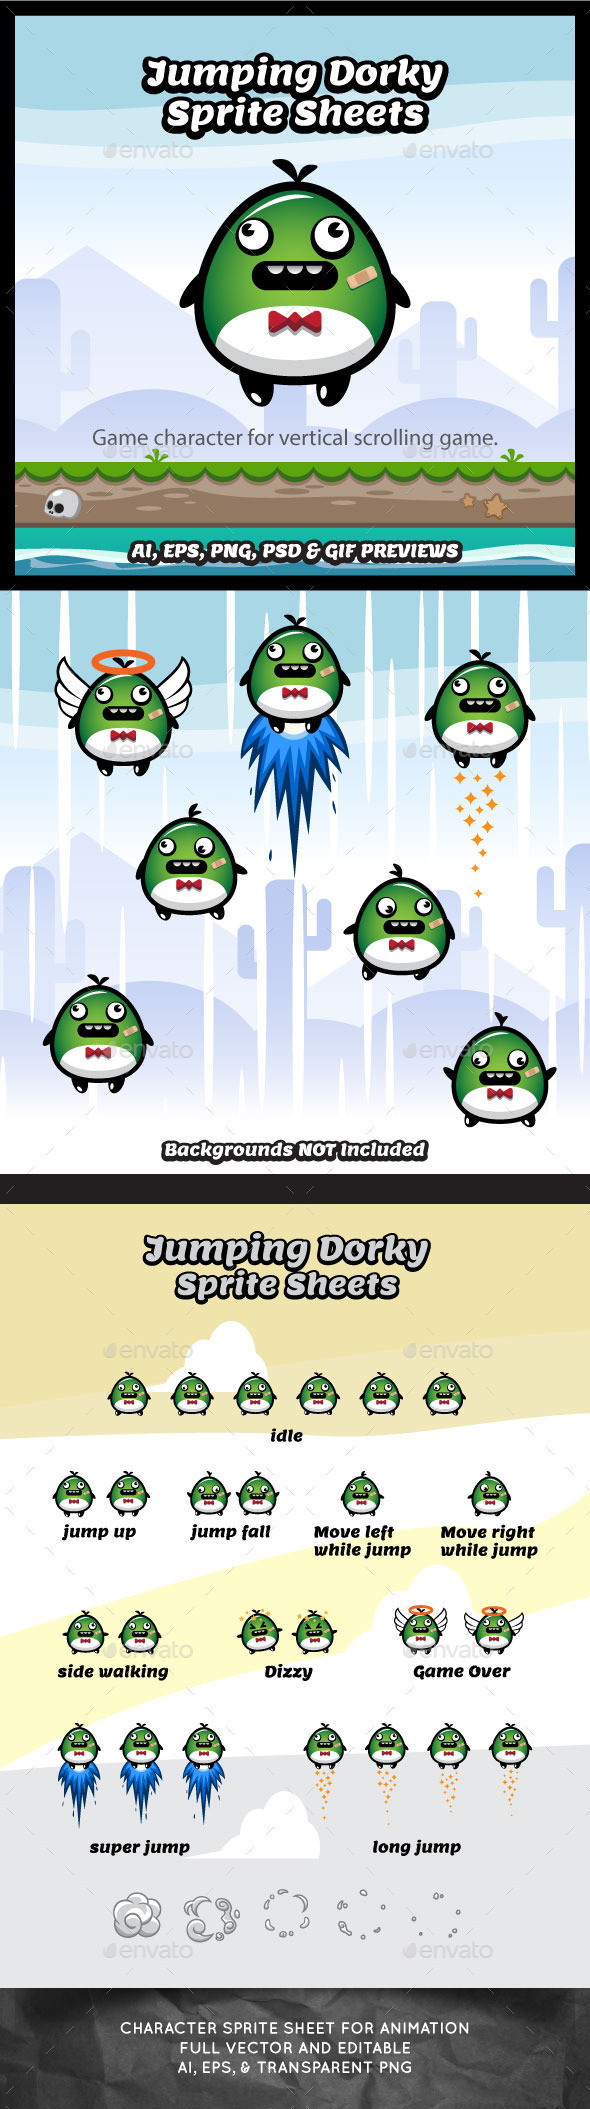 Jumping dorky game character sprite sheet vertical scrolling game asset mega jump animation gui mobile games gameart game art 590